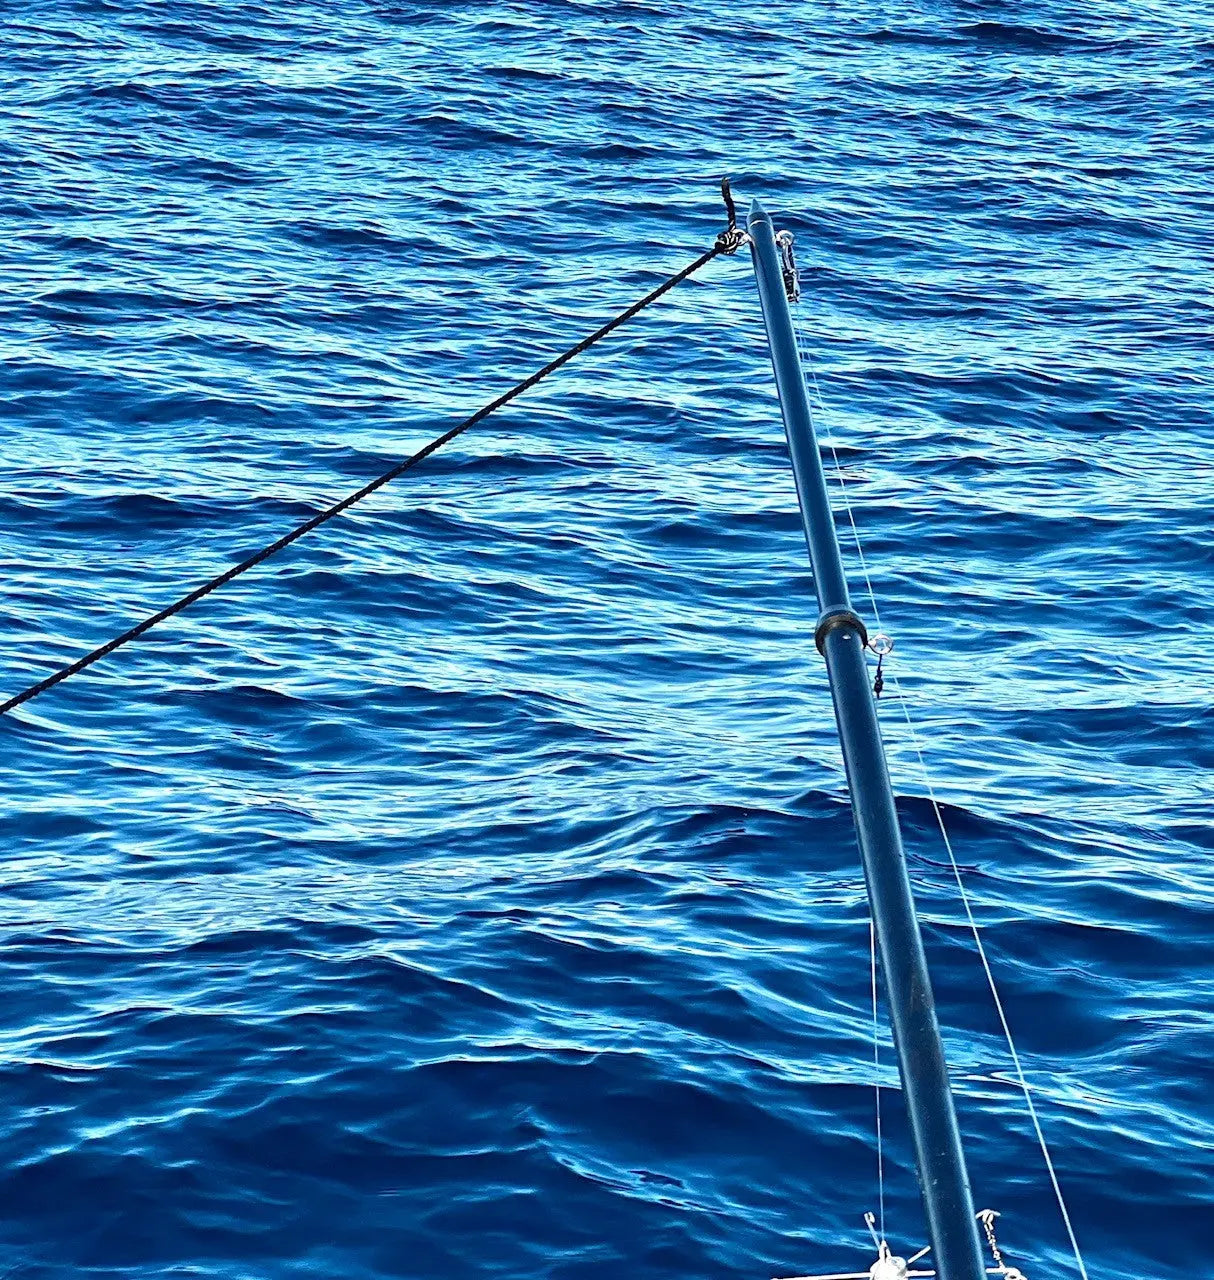 Dev Fishing Dredge Teaser Pole w/ #4 Bent Butt End - DevFishing